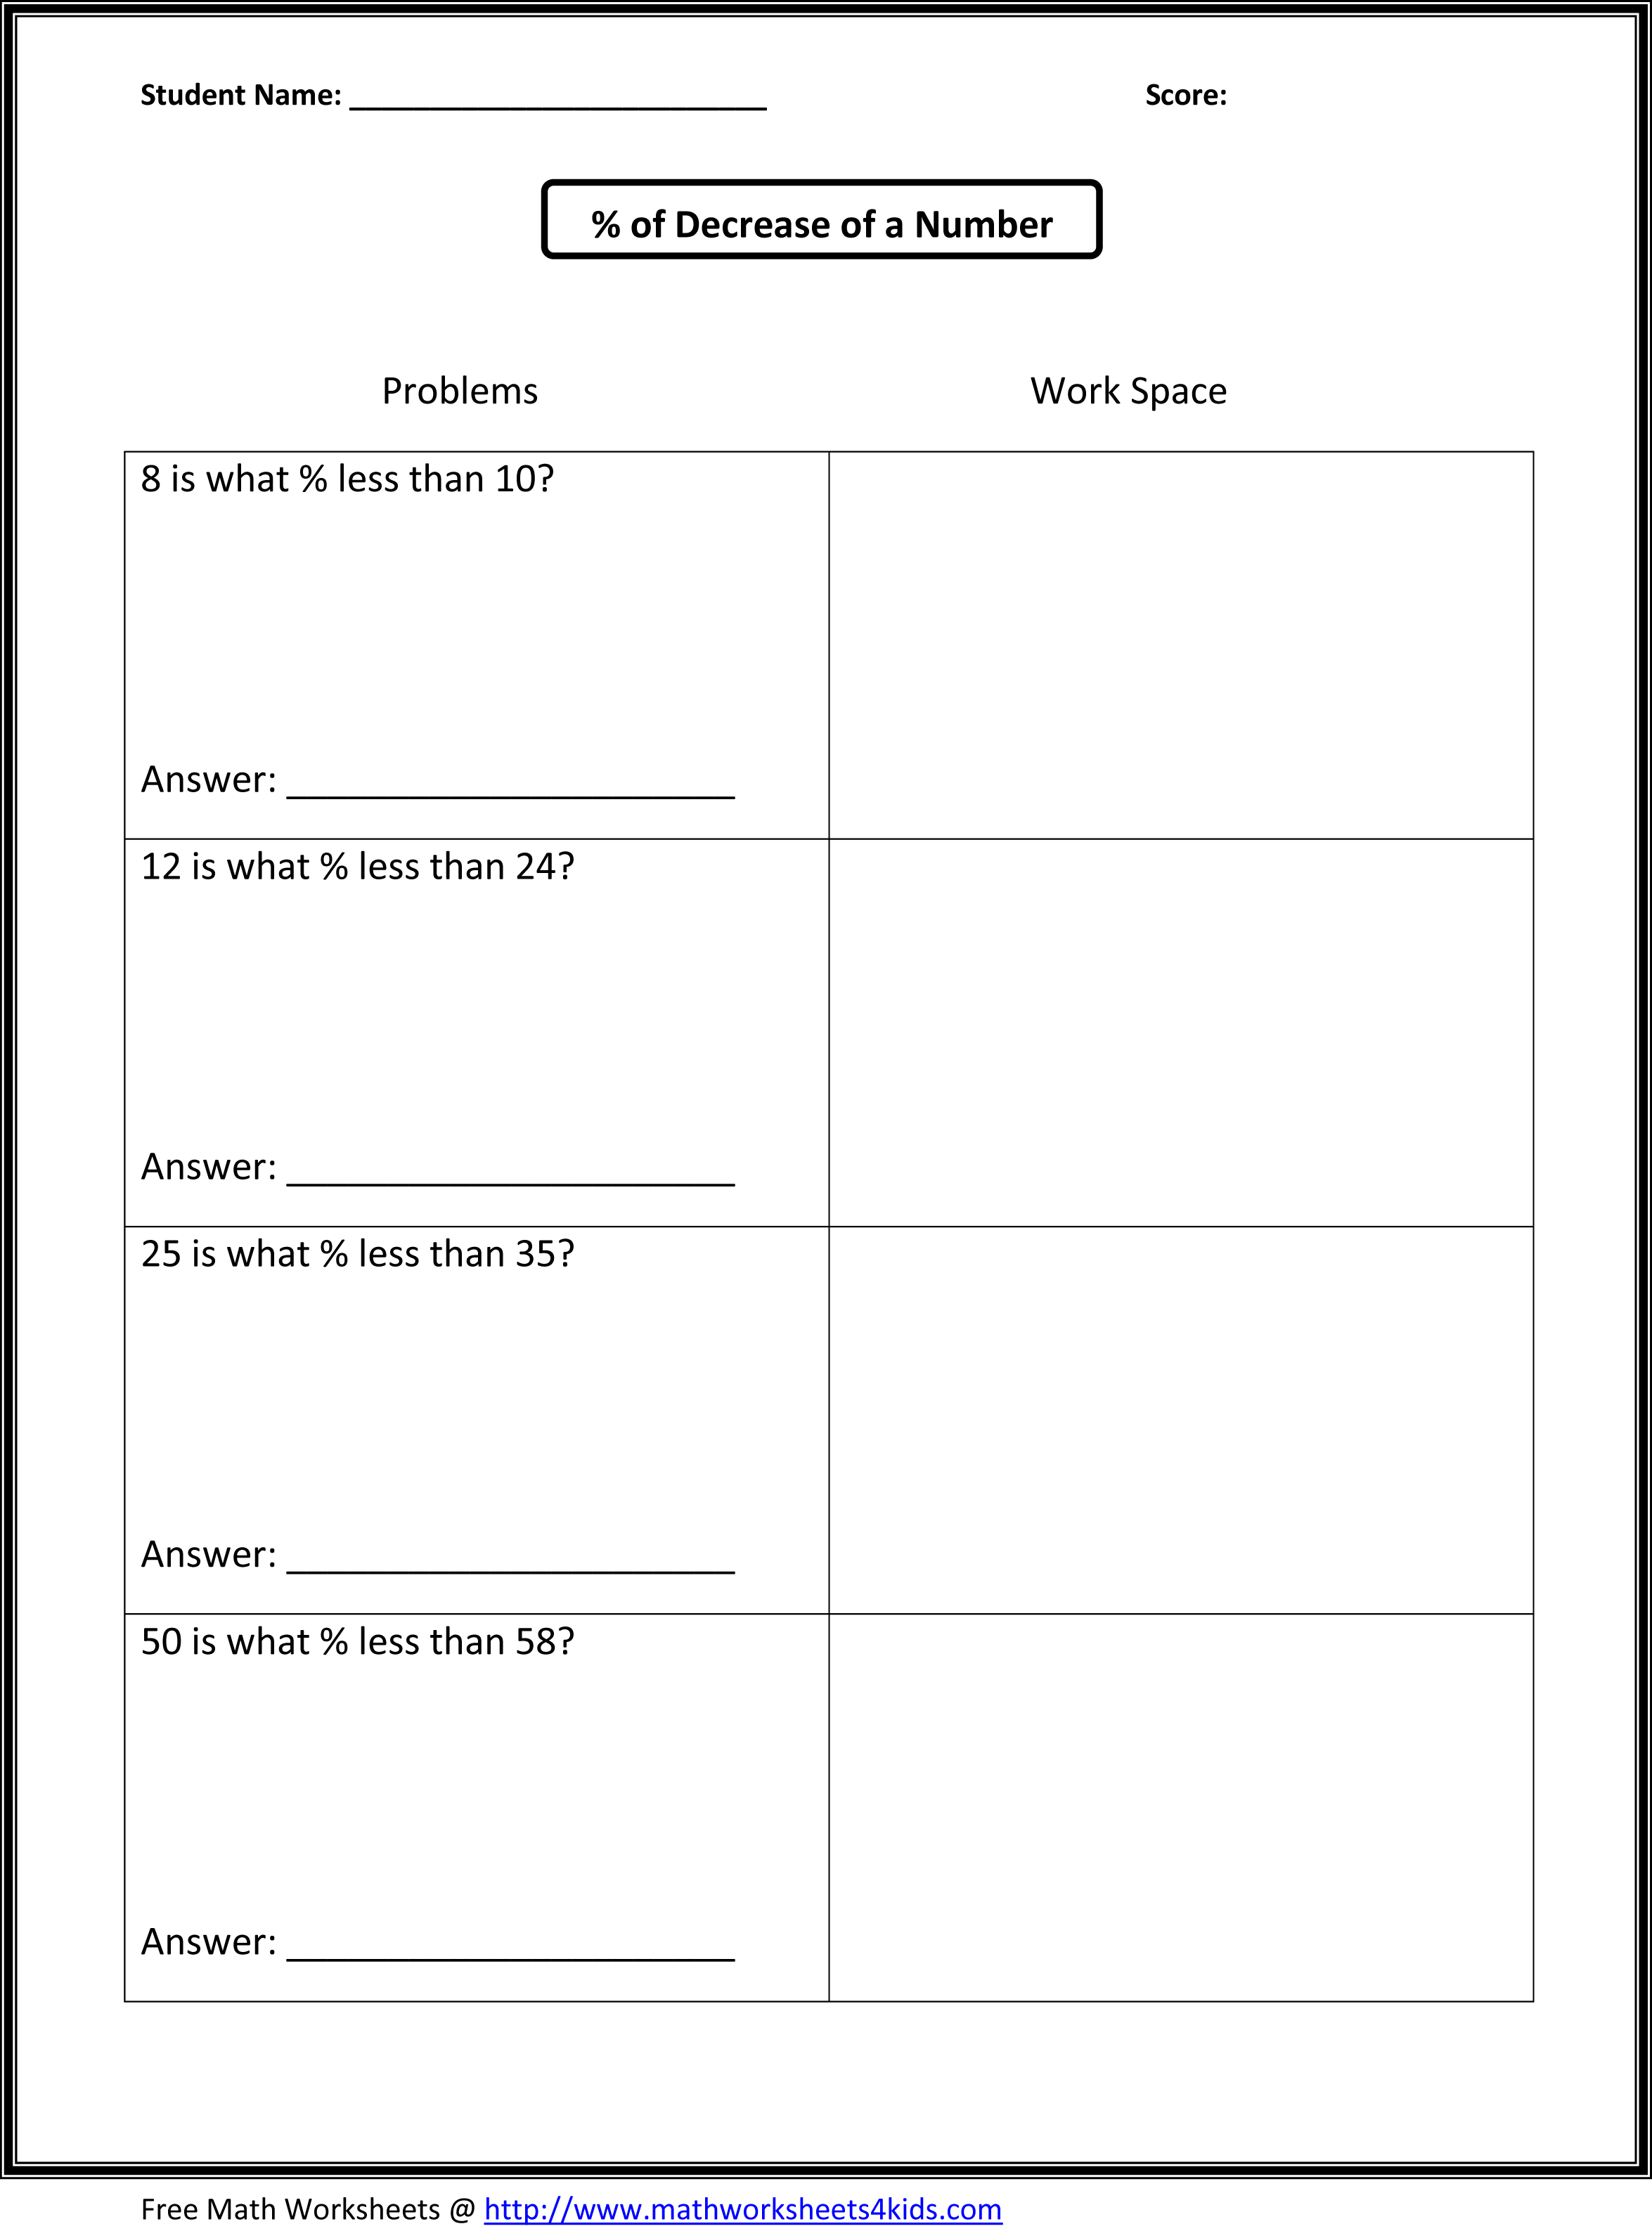 11 Best Images of 7 Grade Worksheets - 7th Grade Math Worksheets, 7th